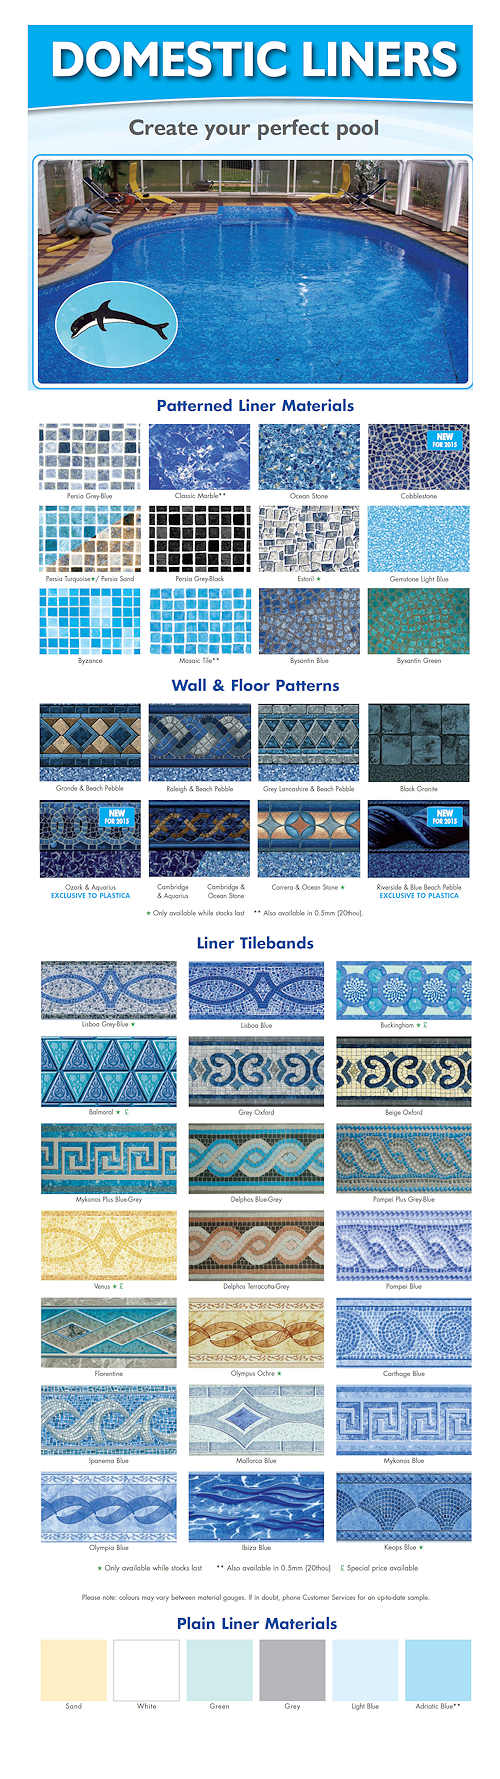 Patterned Liner Materials and Tilebands